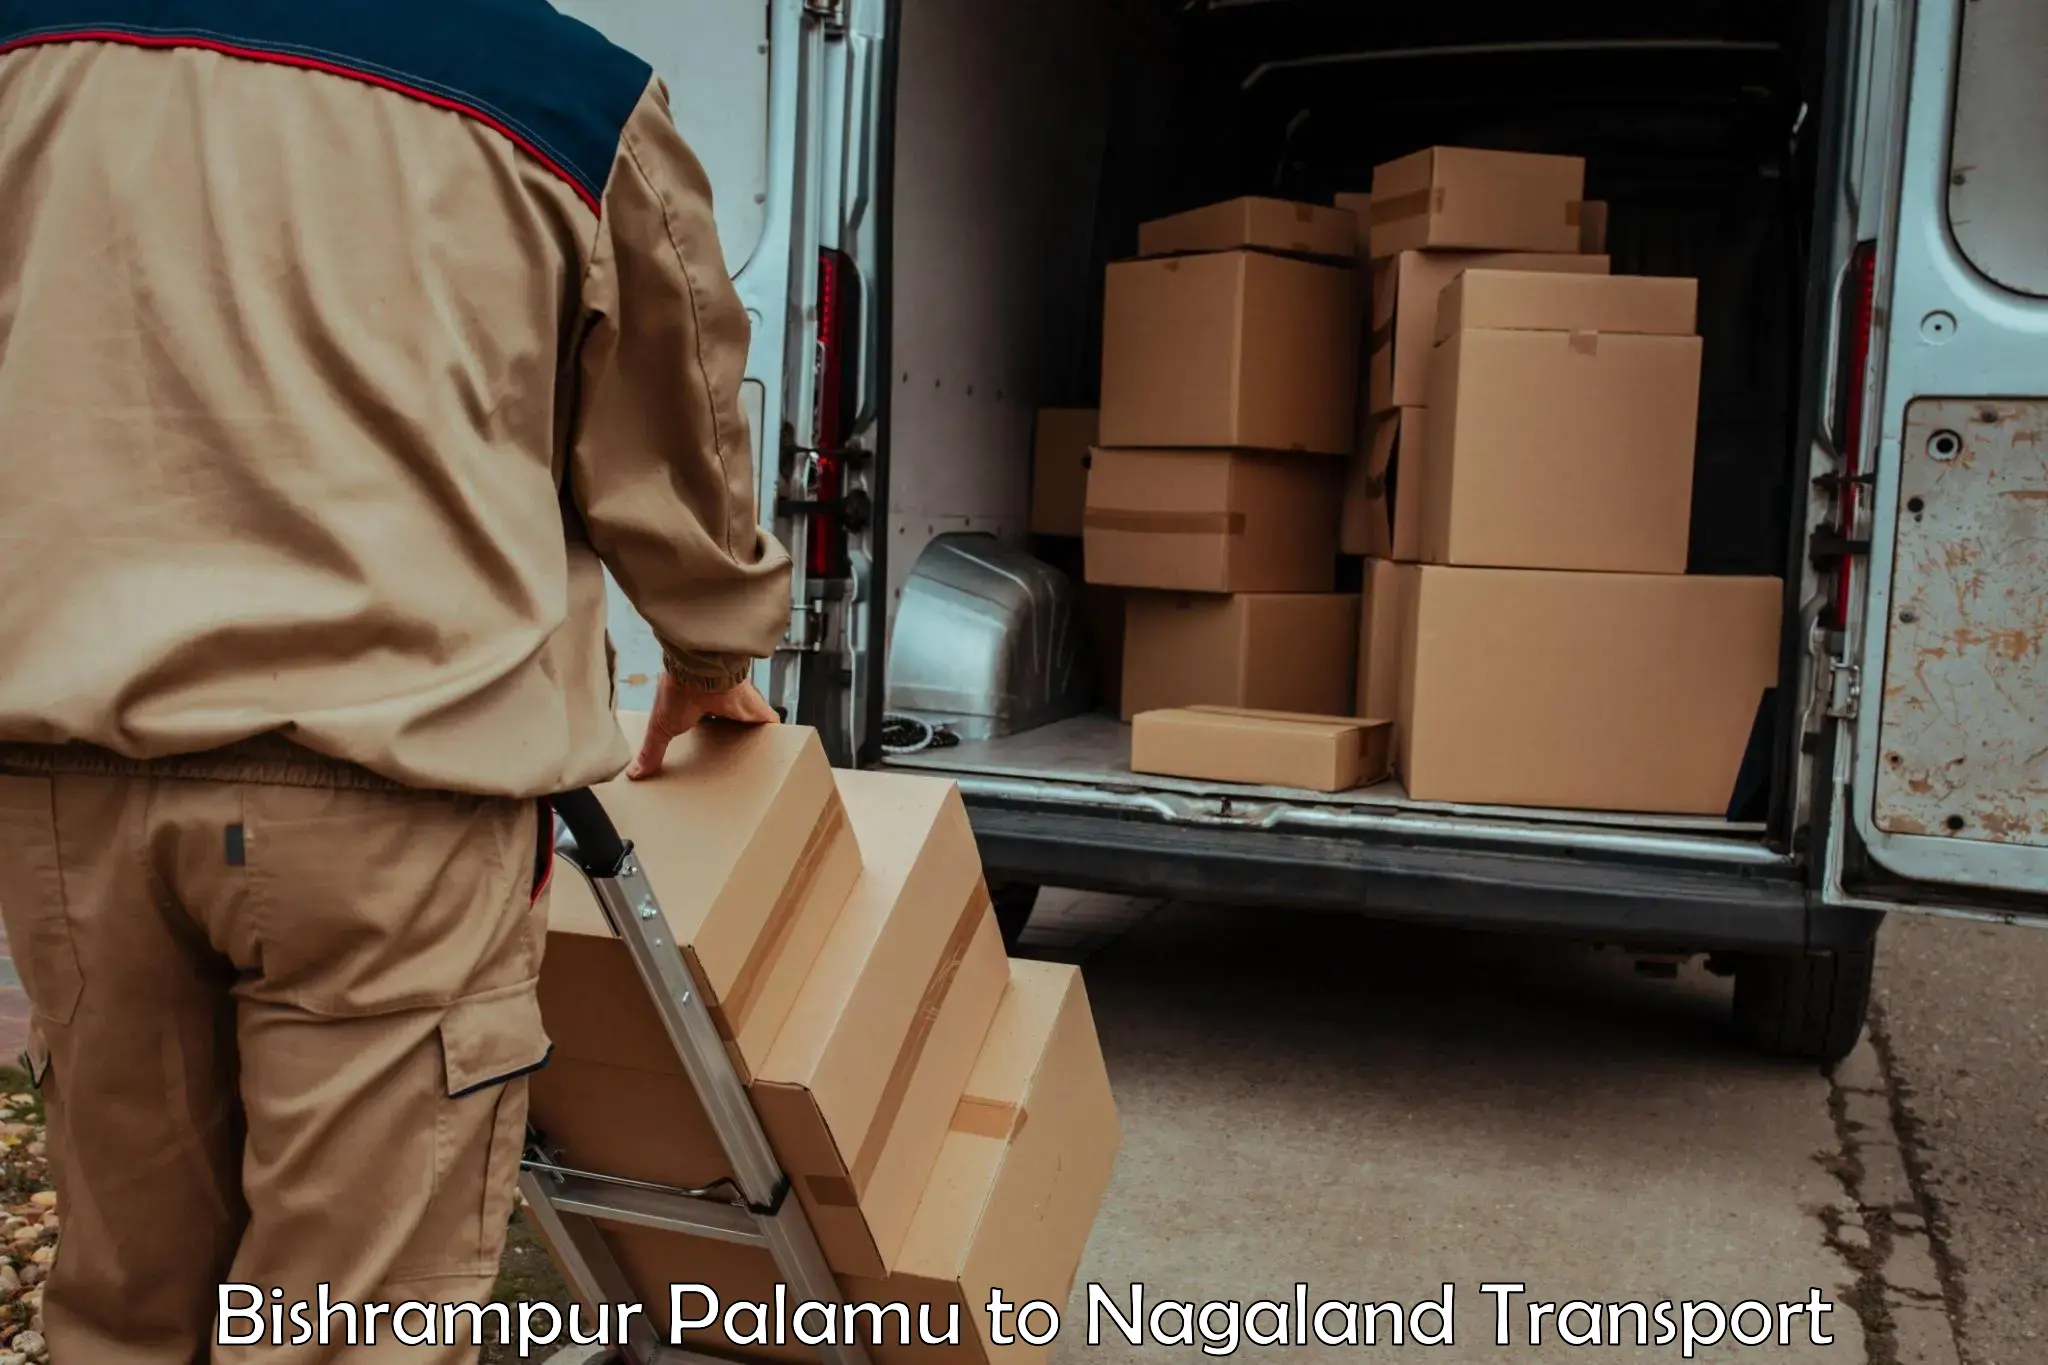 Truck transport companies in India Bishrampur Palamu to Nagaland